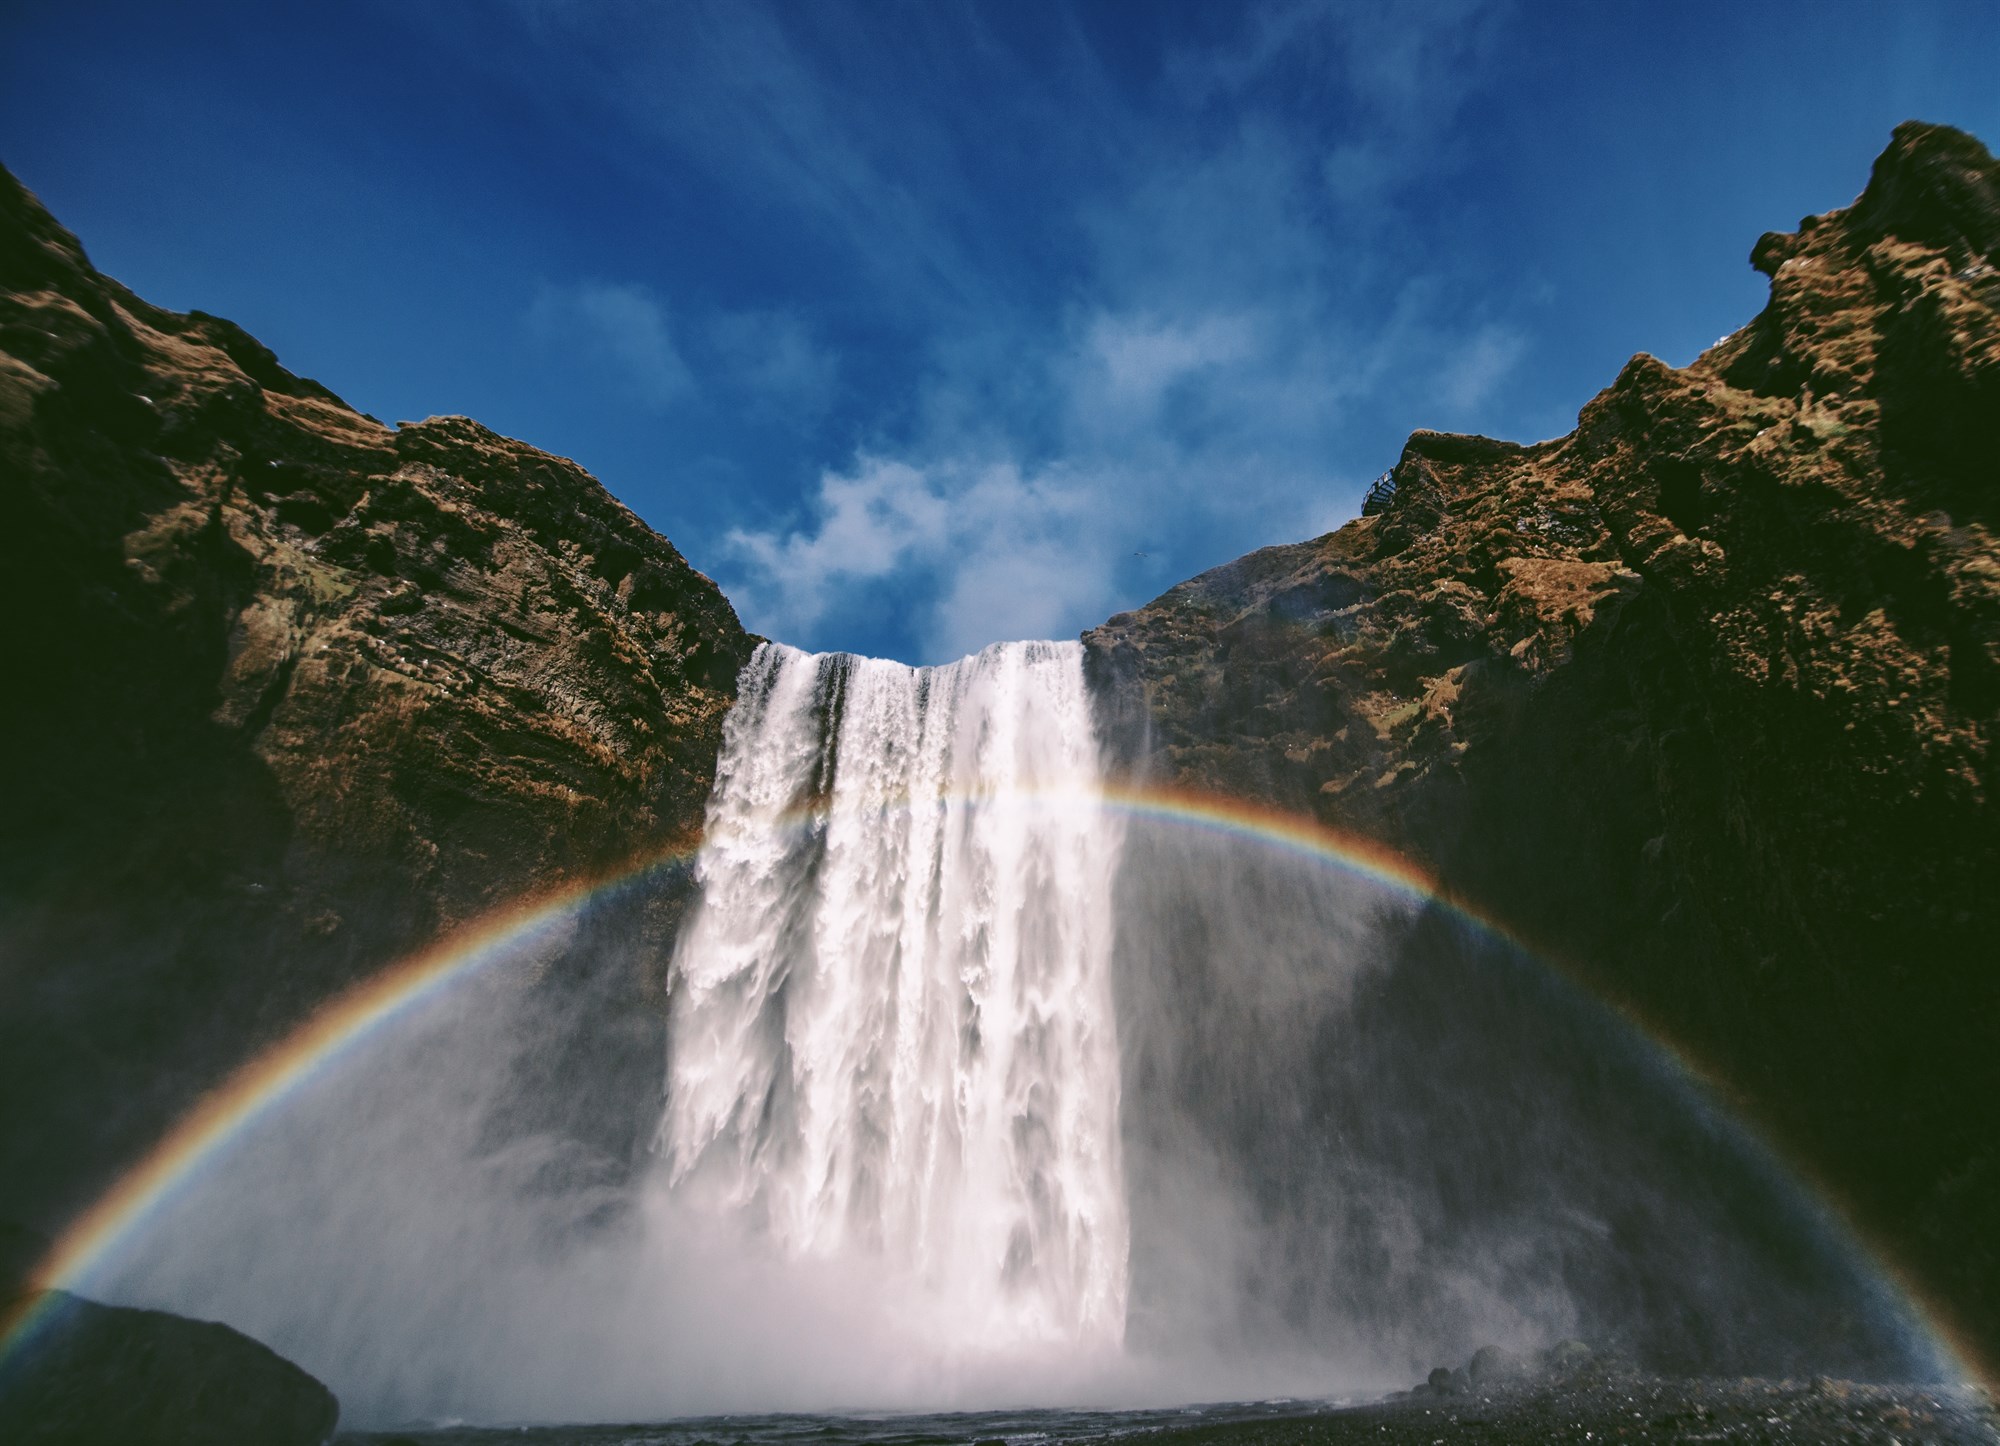 Rainbow of light infront of Skogafoss waterfall, Iceland.